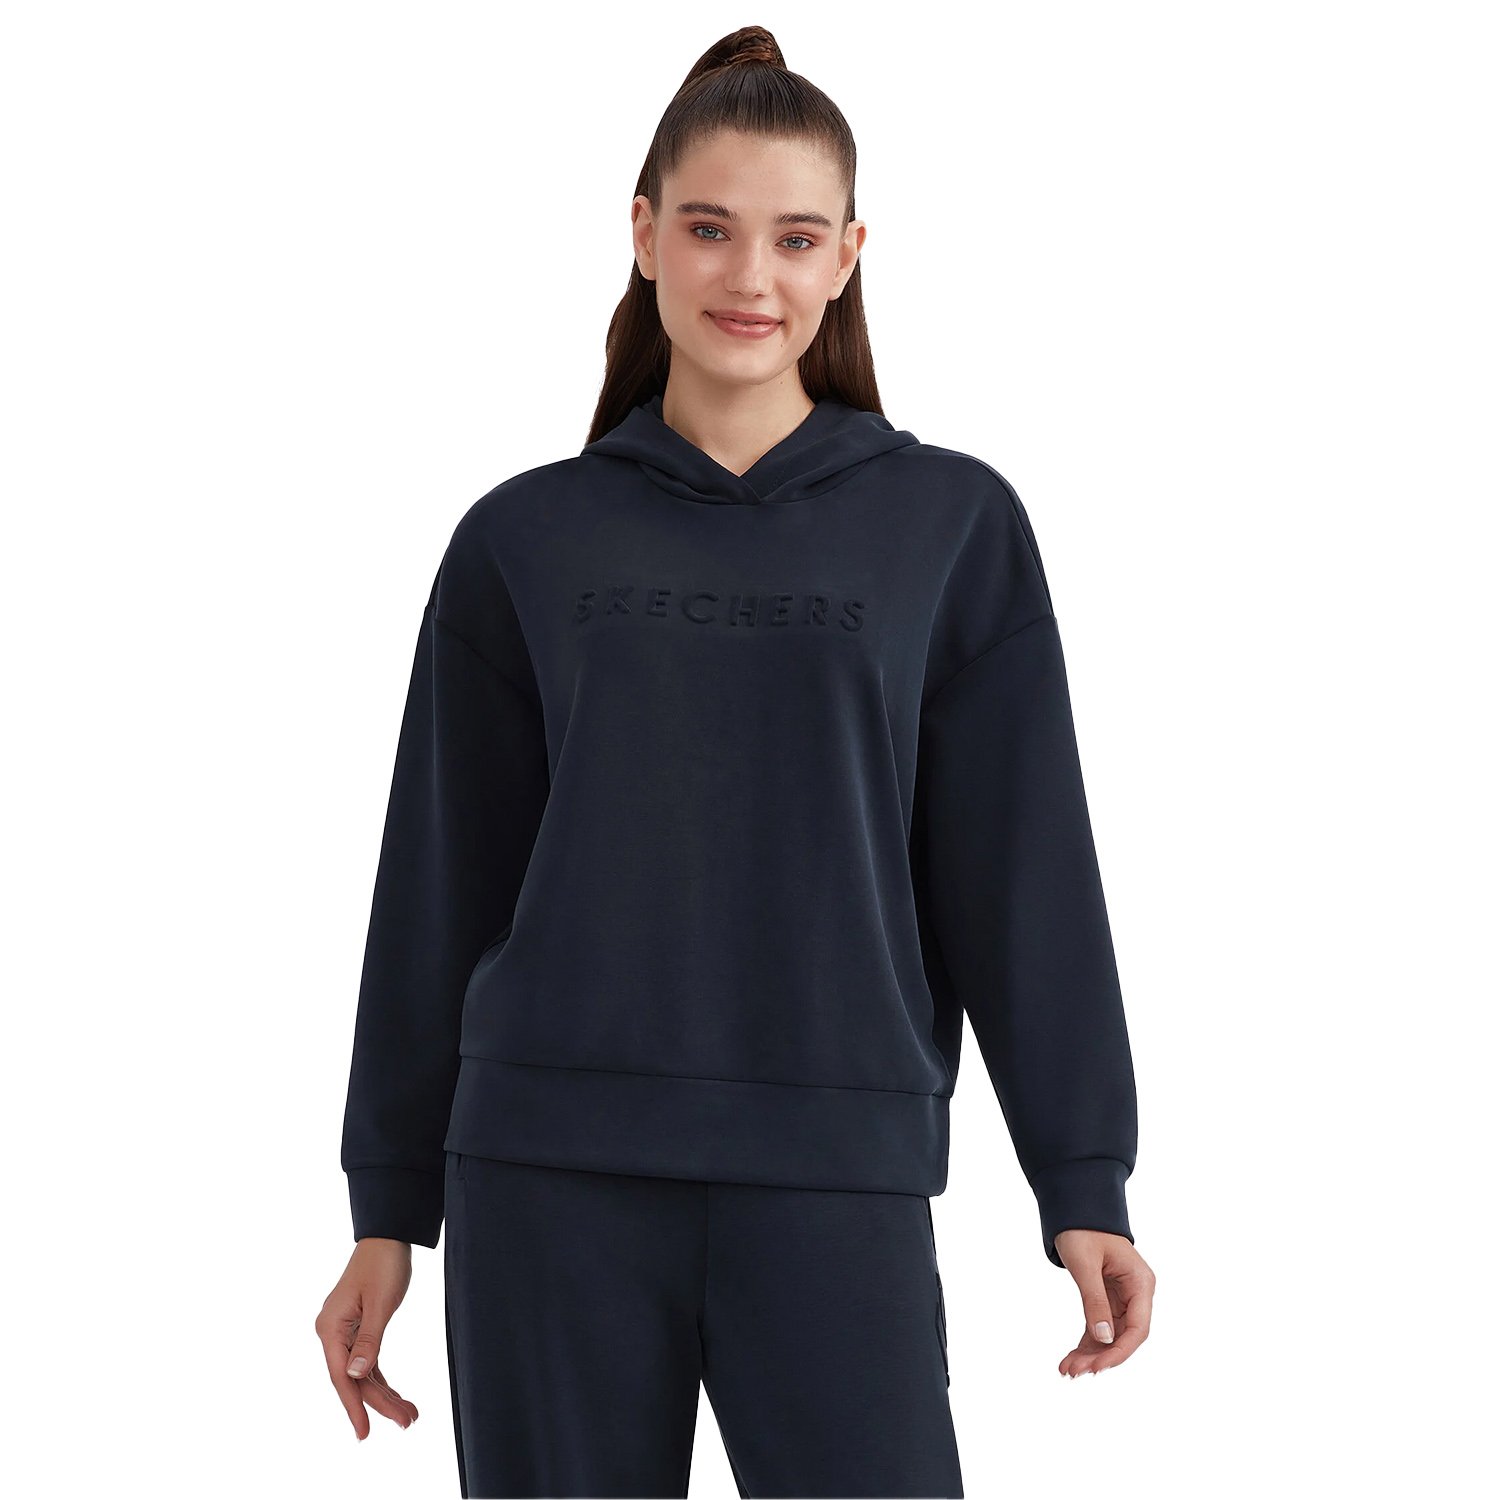 Skechers Soft Touch Kadın Sweatshirt - Siyah - 1